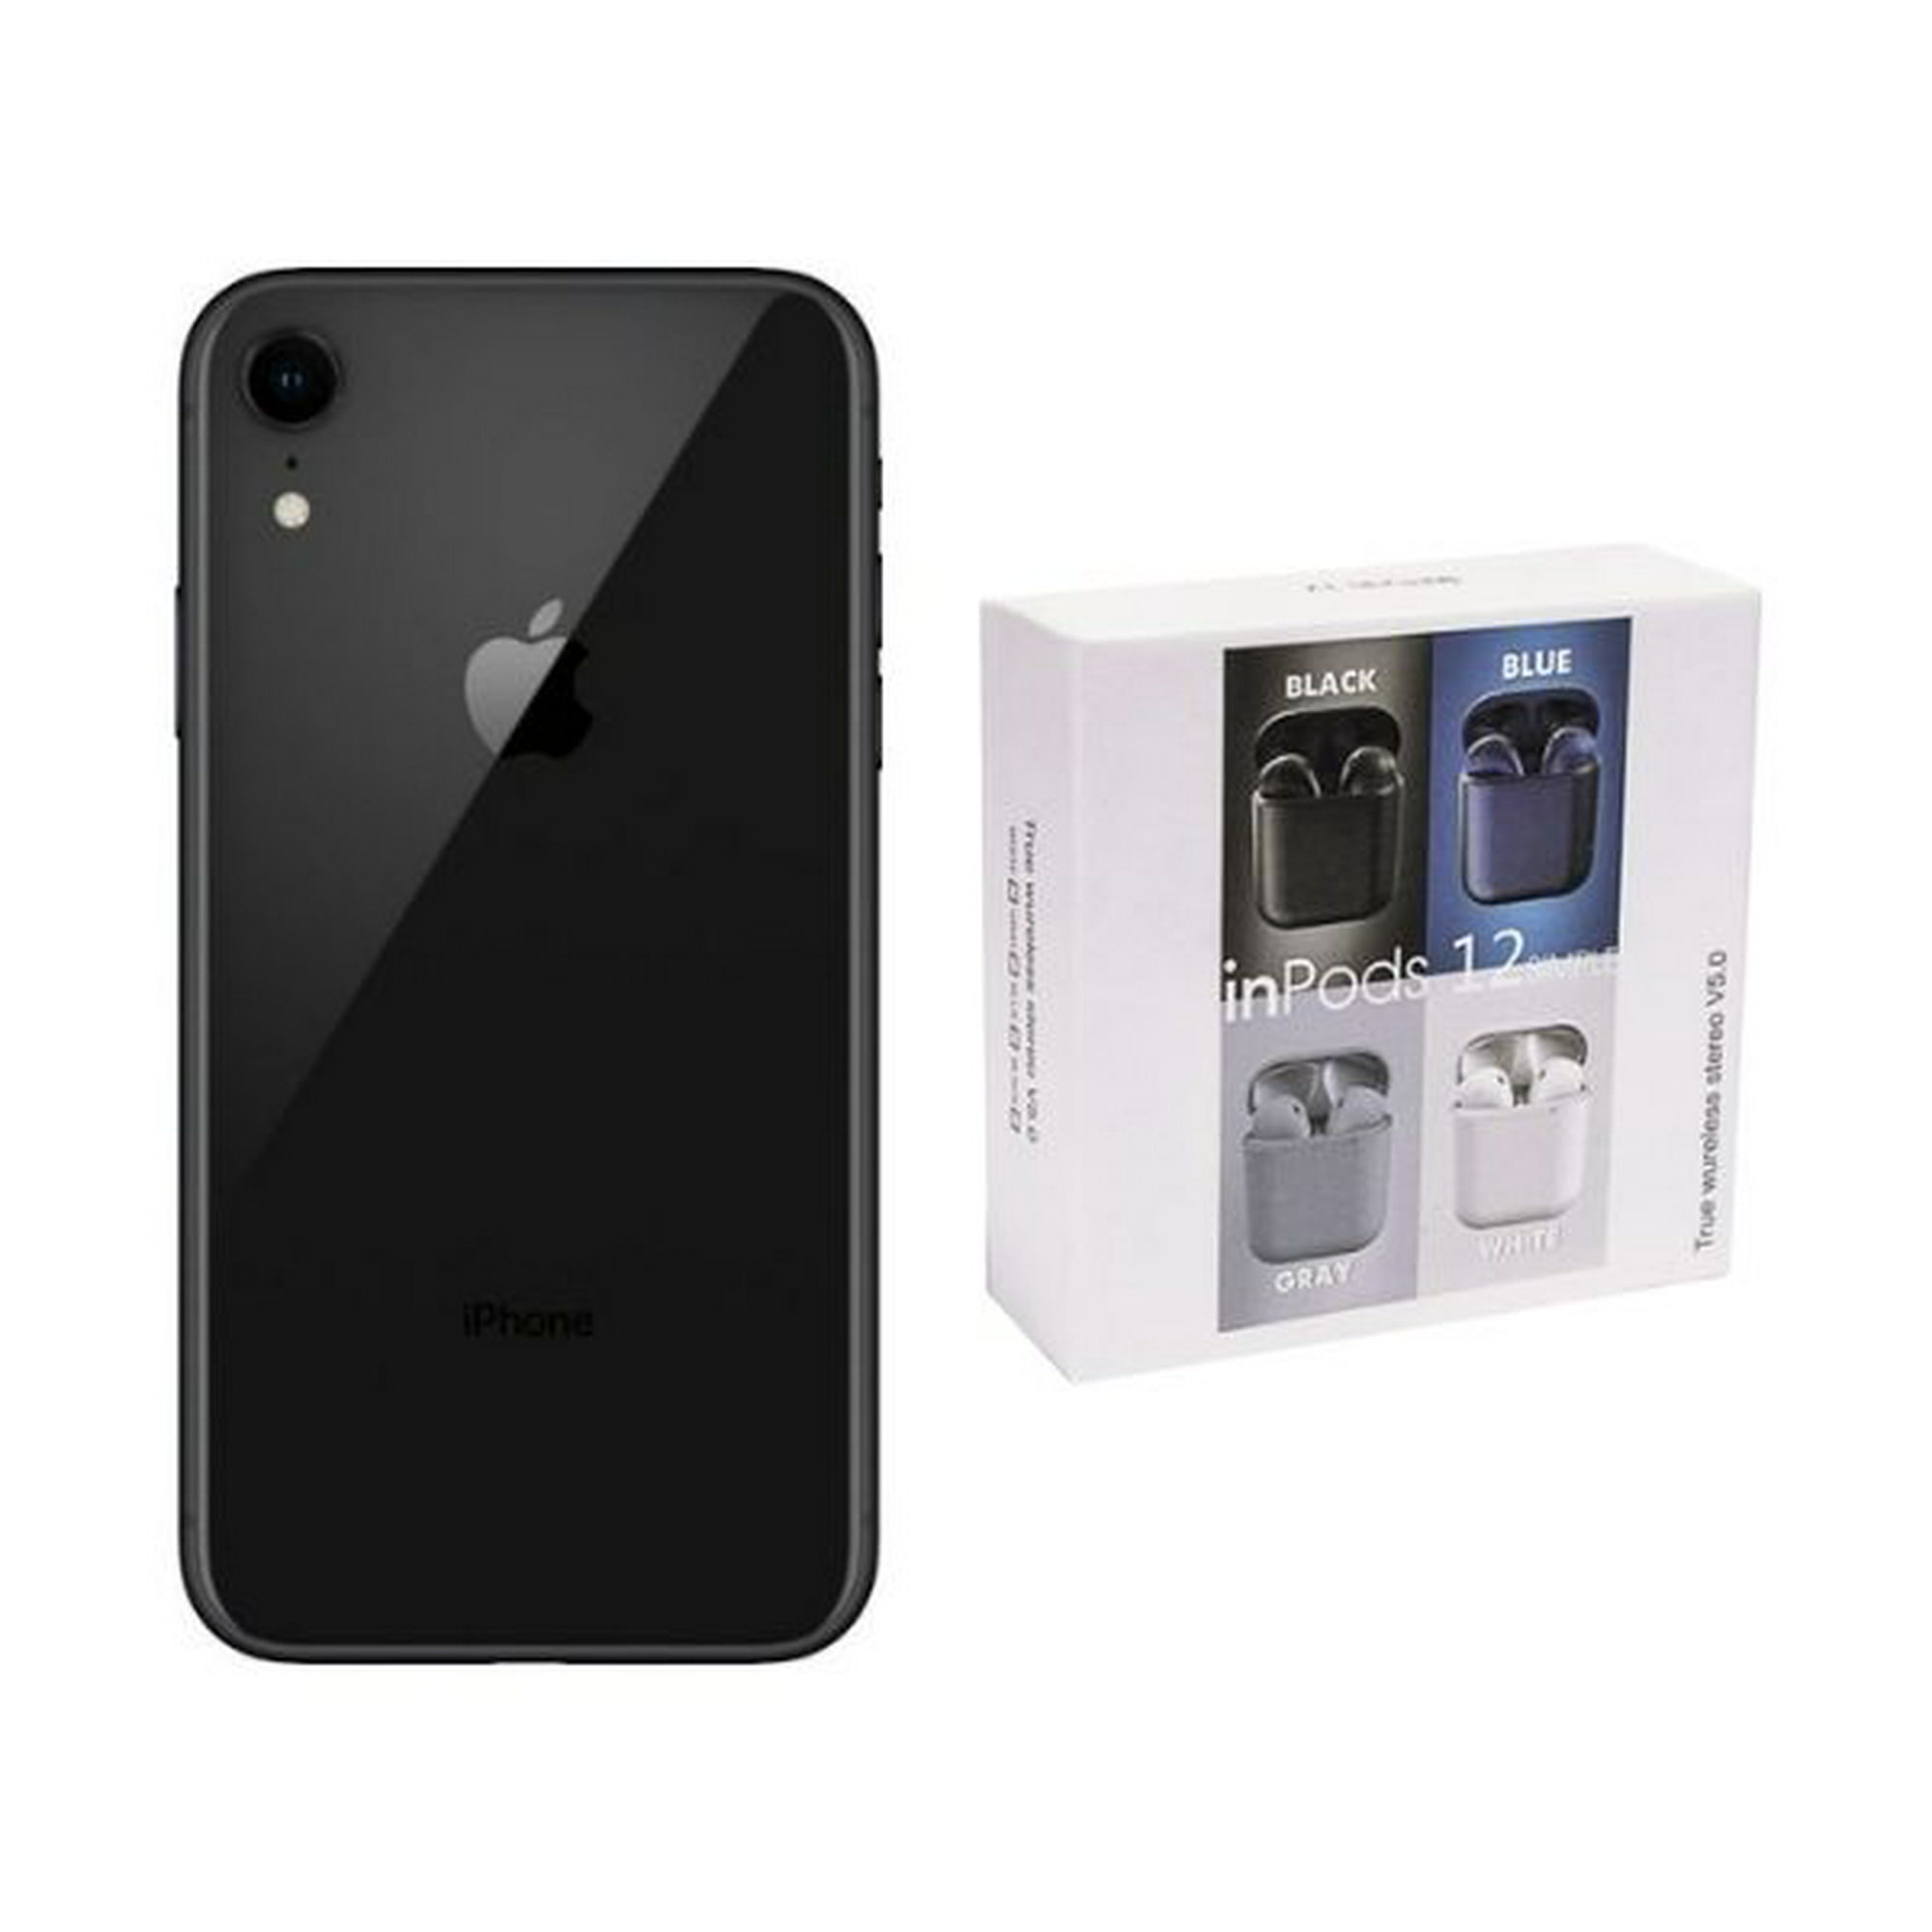 Apple iPhone XR 64 GB Azul (Reacondicionado) : : Electrónica